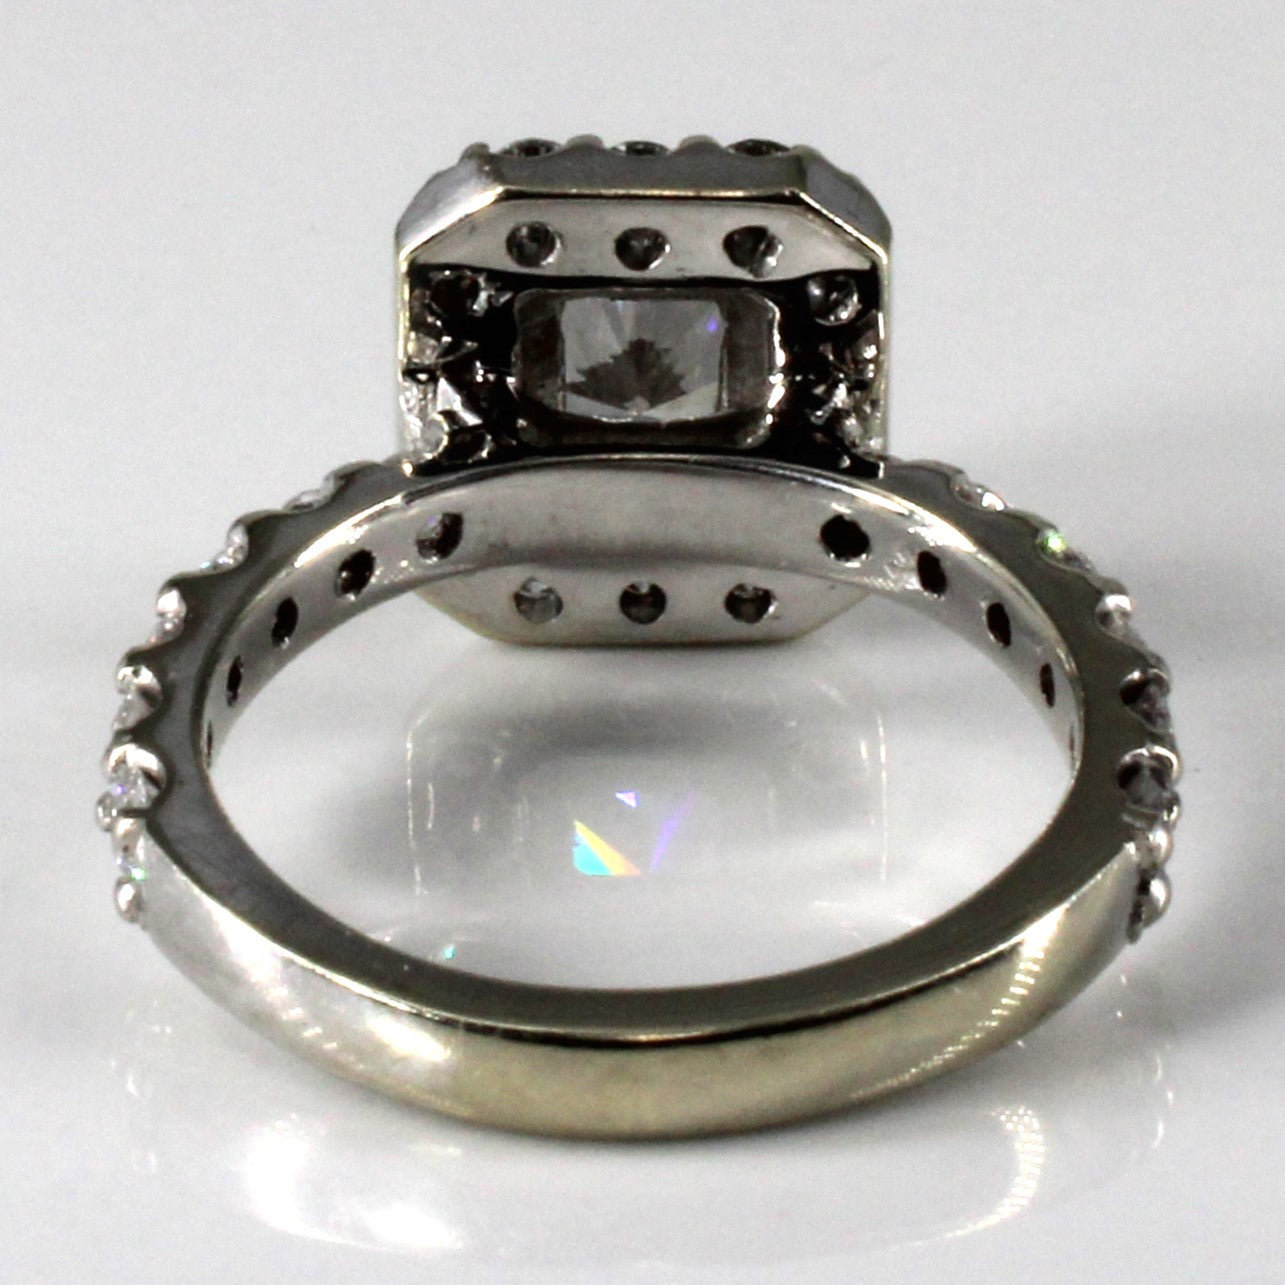 Halo Rectangular GIA Certified Diamond Engagement Ring | 2.10ctw SI1 F | SZ 5.75 |